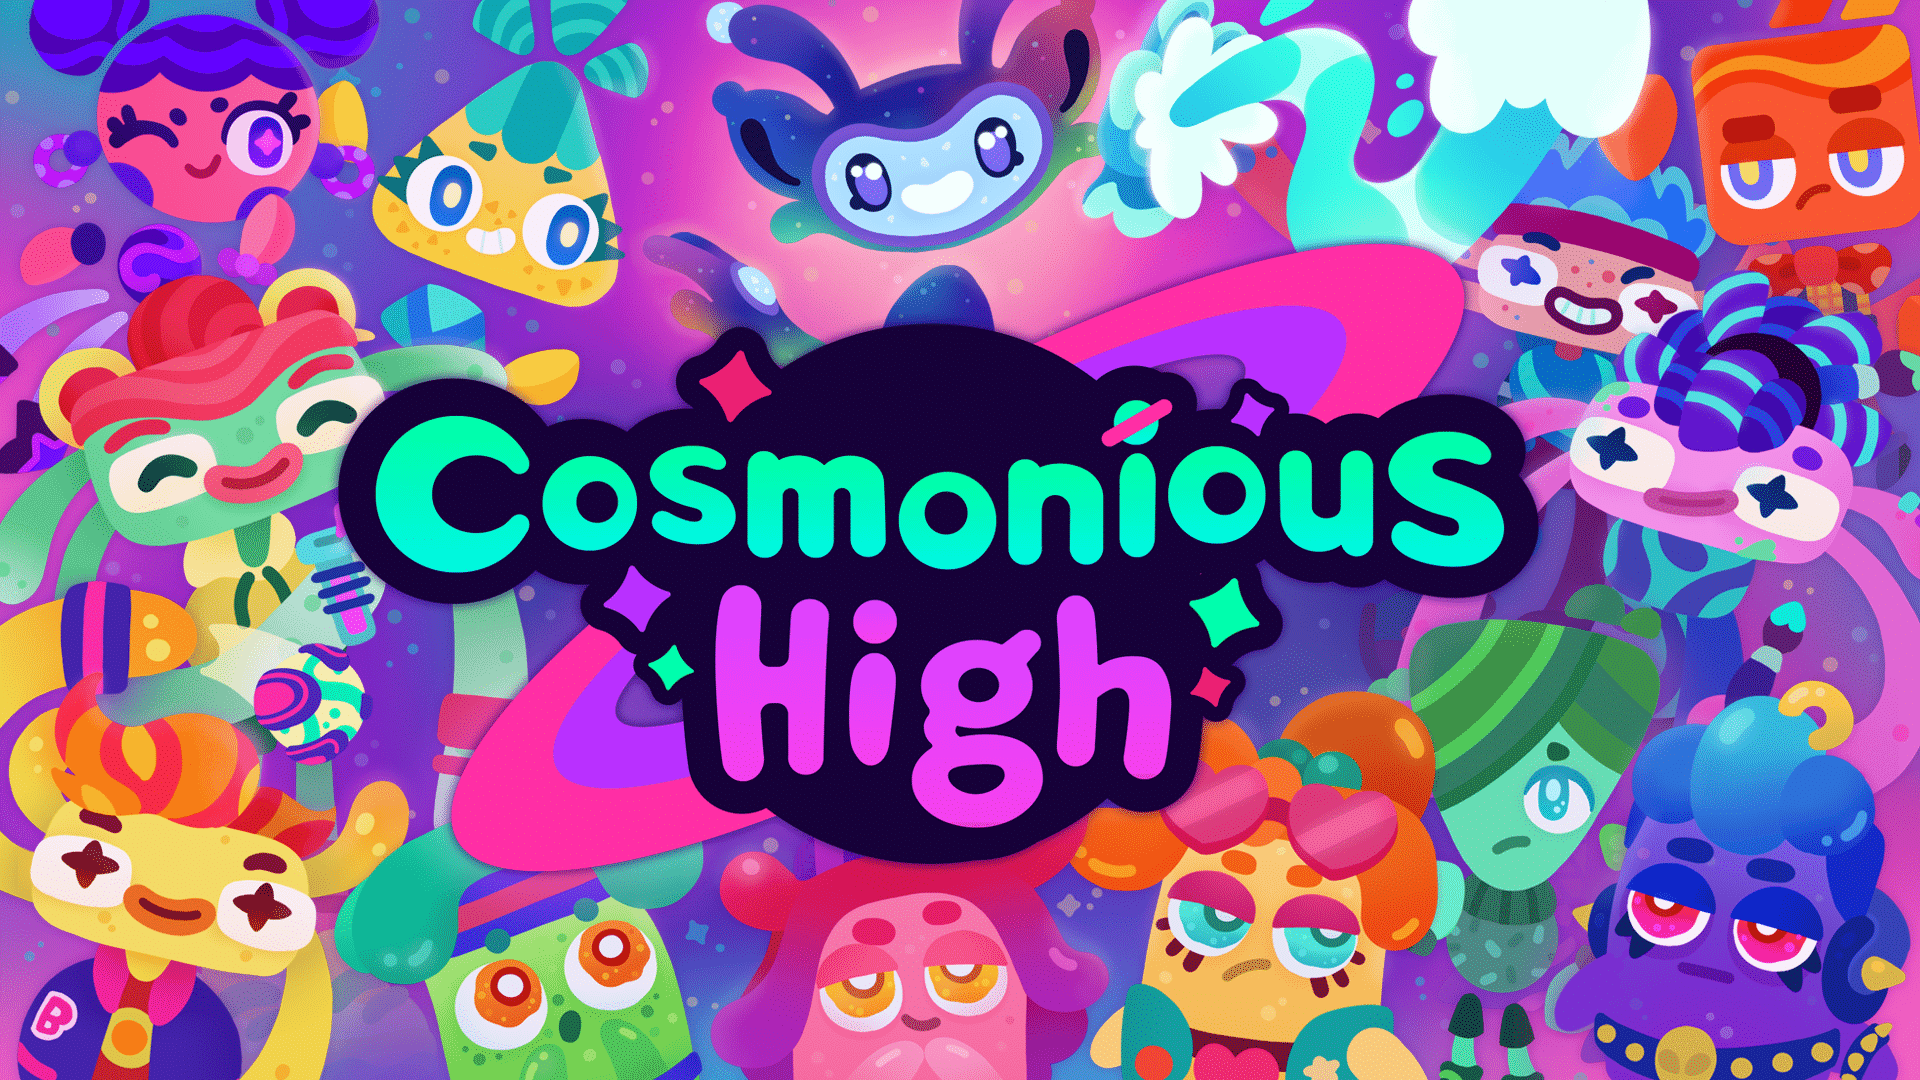 Cosmonious-High-Key-Art